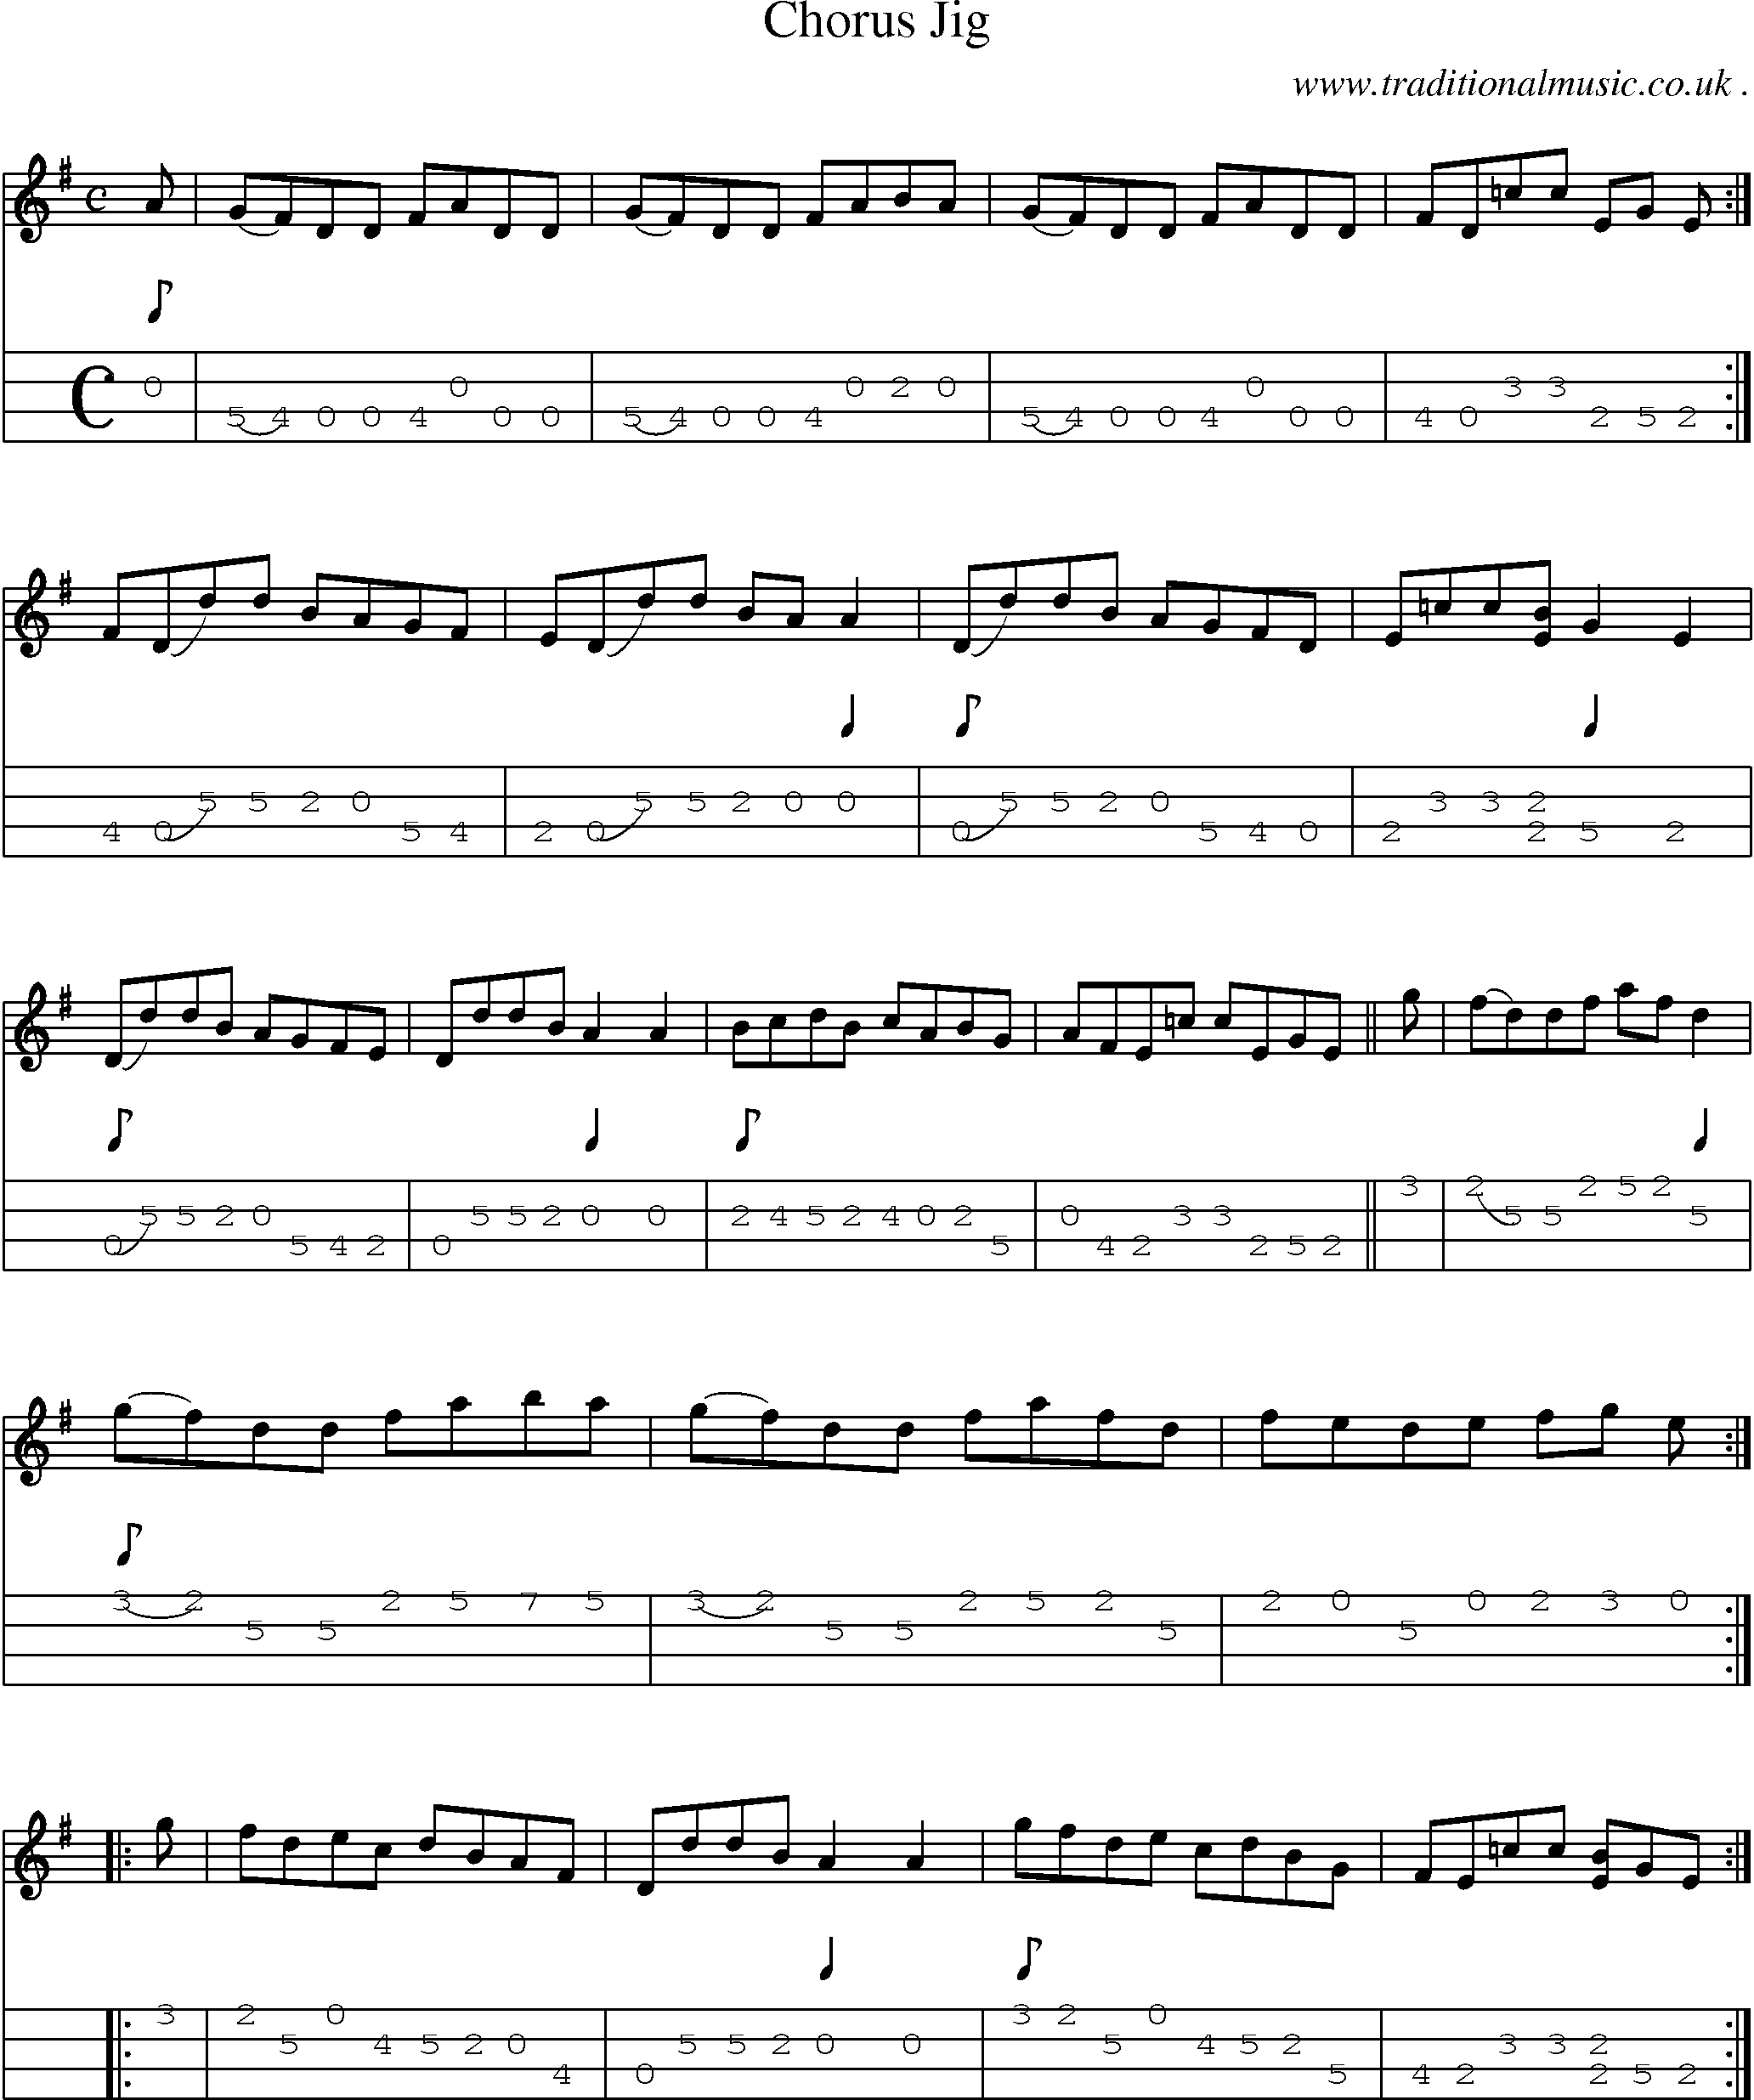 Sheet-music  score, Chords and Mandolin Tabs for Chorus Jig